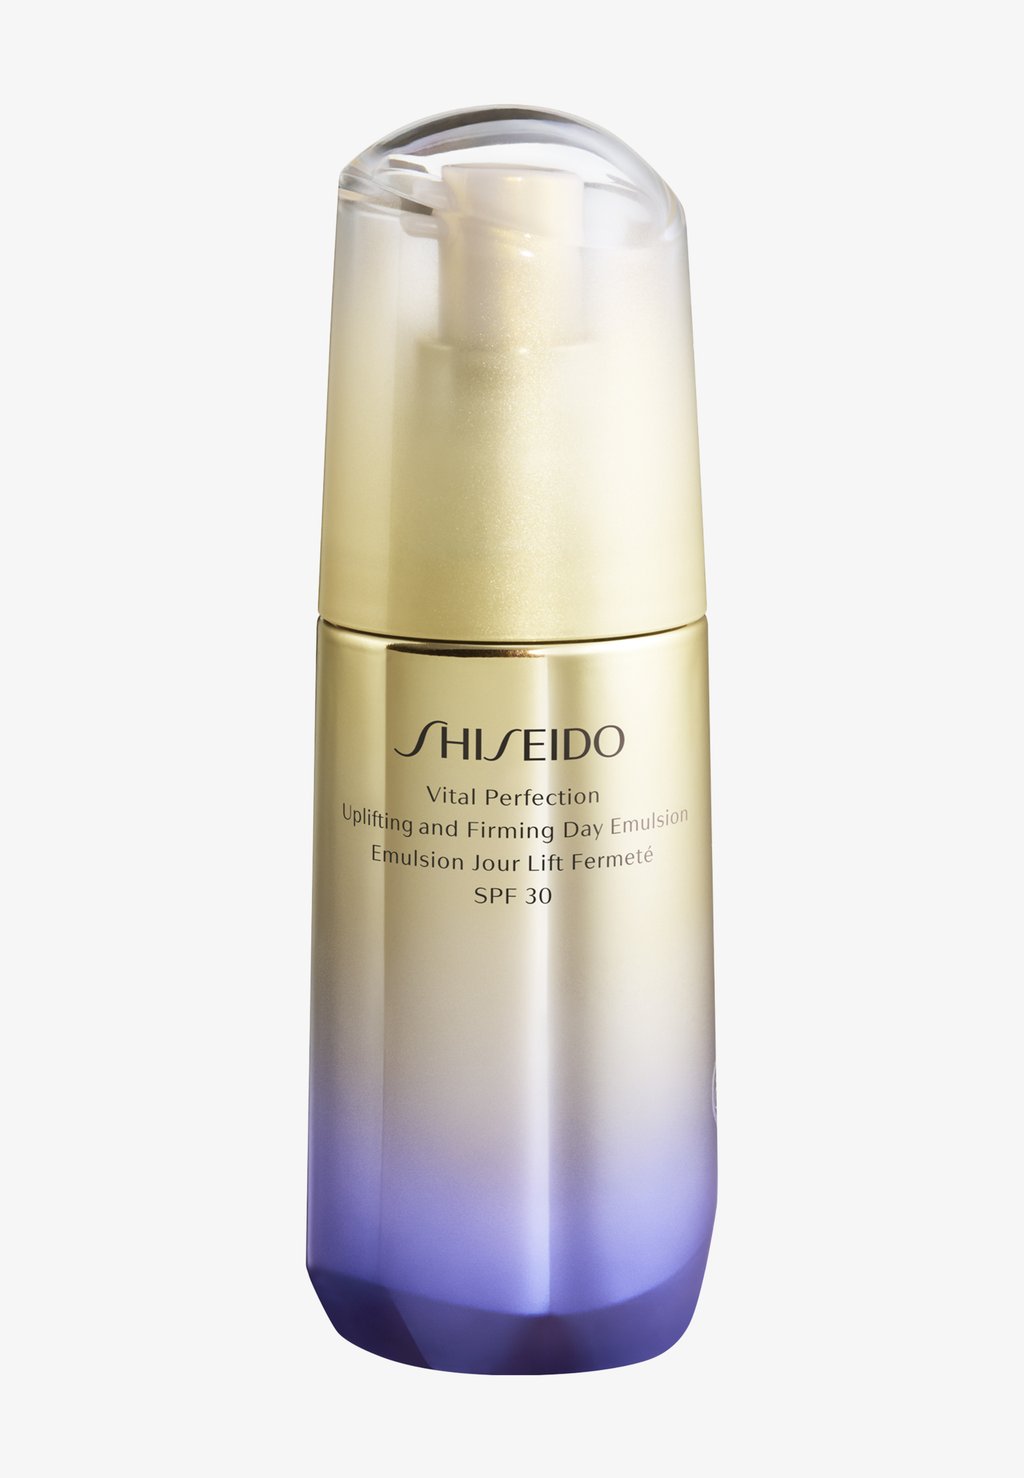 Дневной крем Vital Perfection Uplifting And Firming Day Emulsion Spf30 75Ml Shiseido фотографии